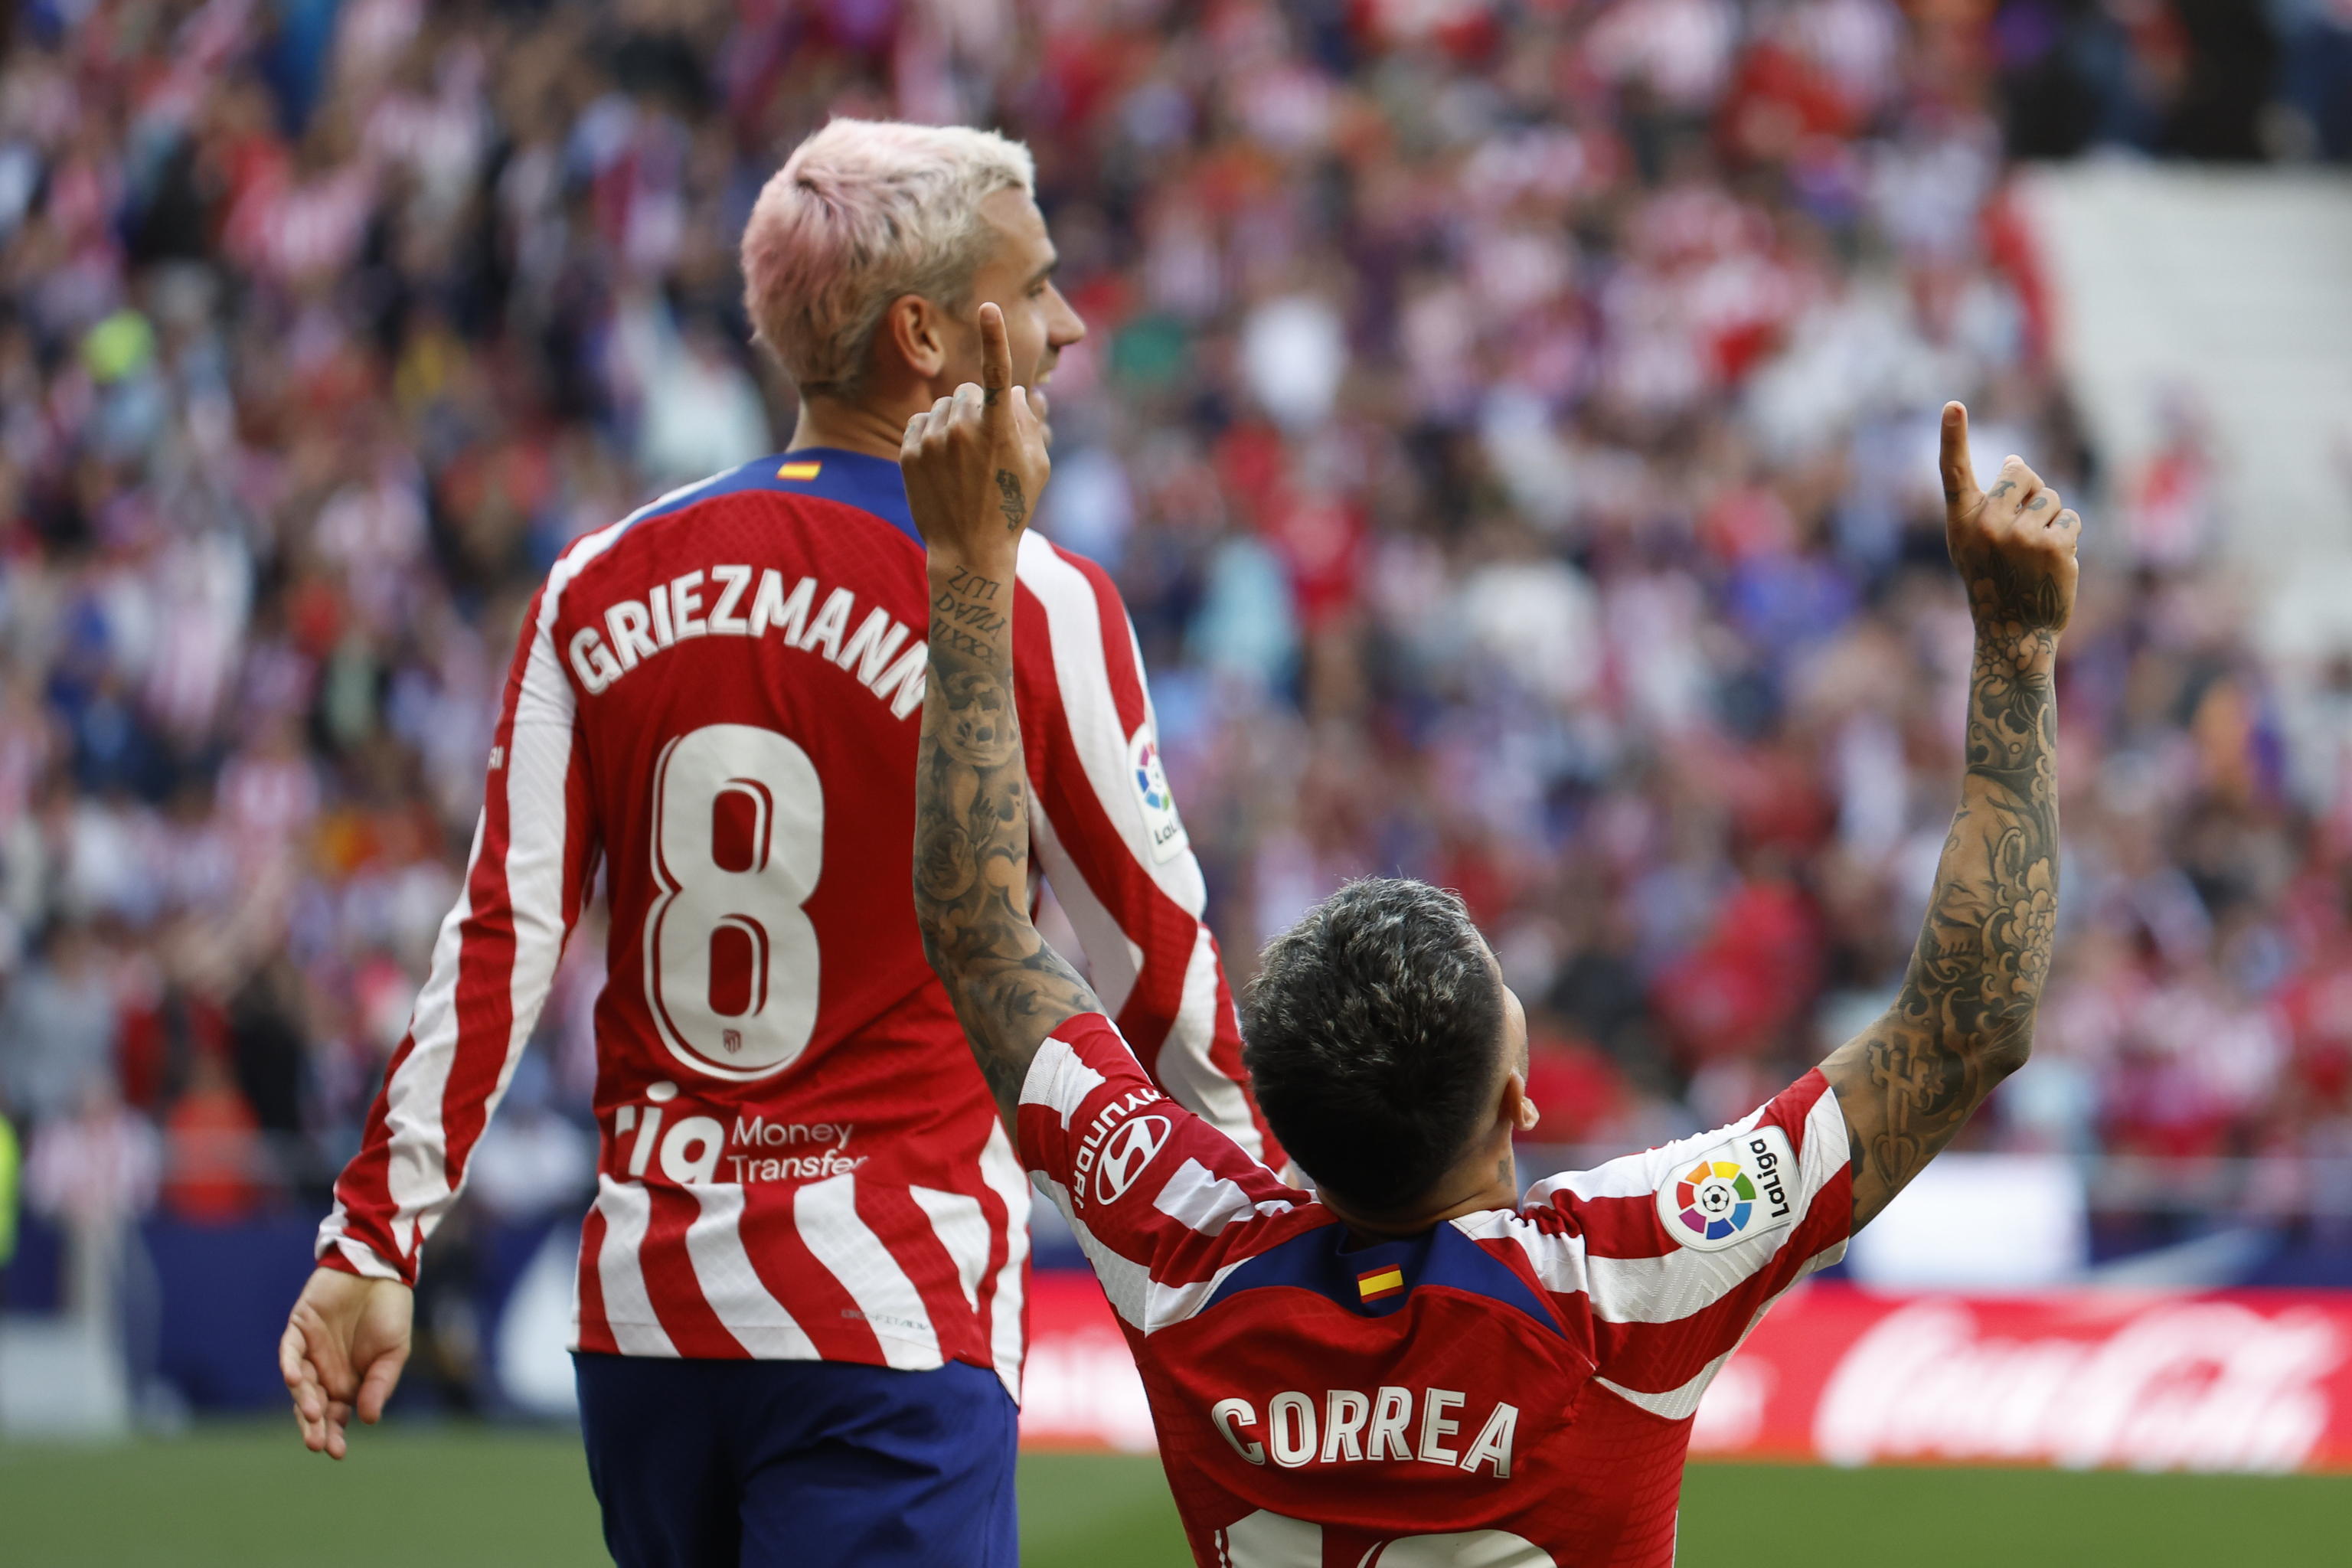 Griezmann and Correa celebrate an Atleti goal.